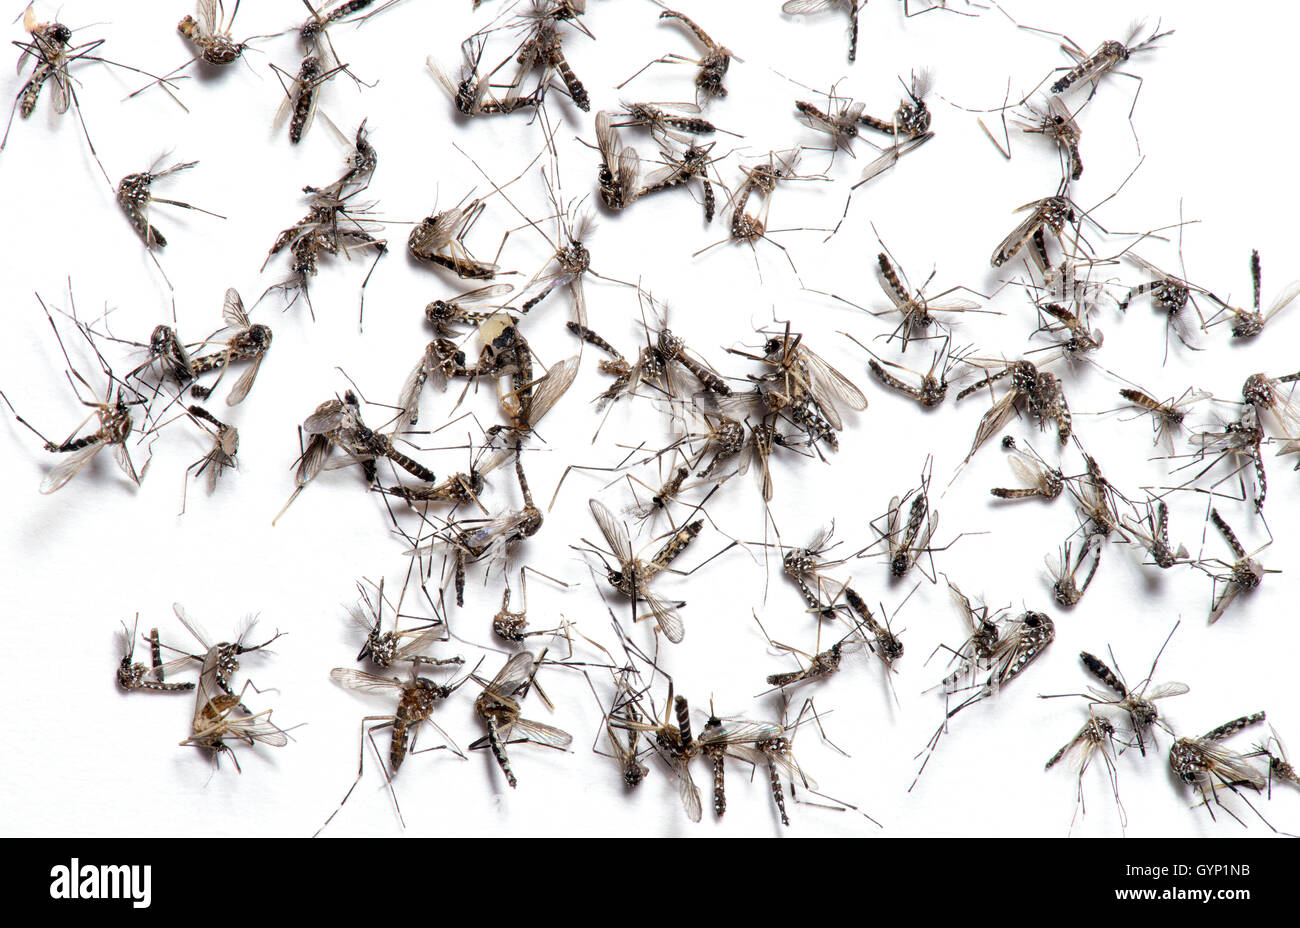 Aedes aegypti, Anopheles quadrimaculatus, (common malaria mosquito), harvested in the Sonoran Desert, Tucson, Arizona, USA. Stock Photo